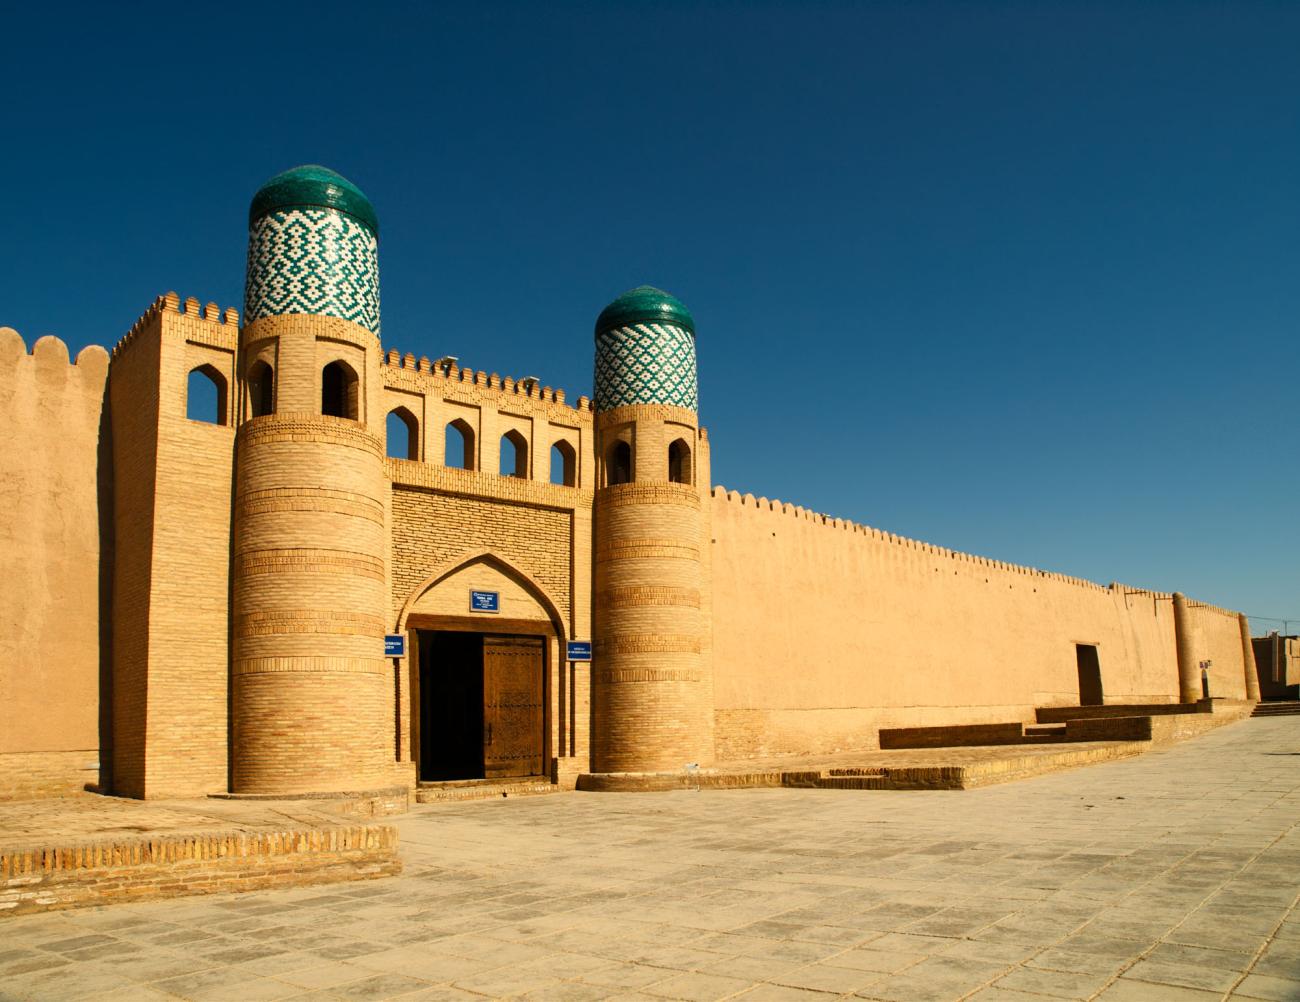 Kunya-Ark gates in Uzbekistan Silk Road 